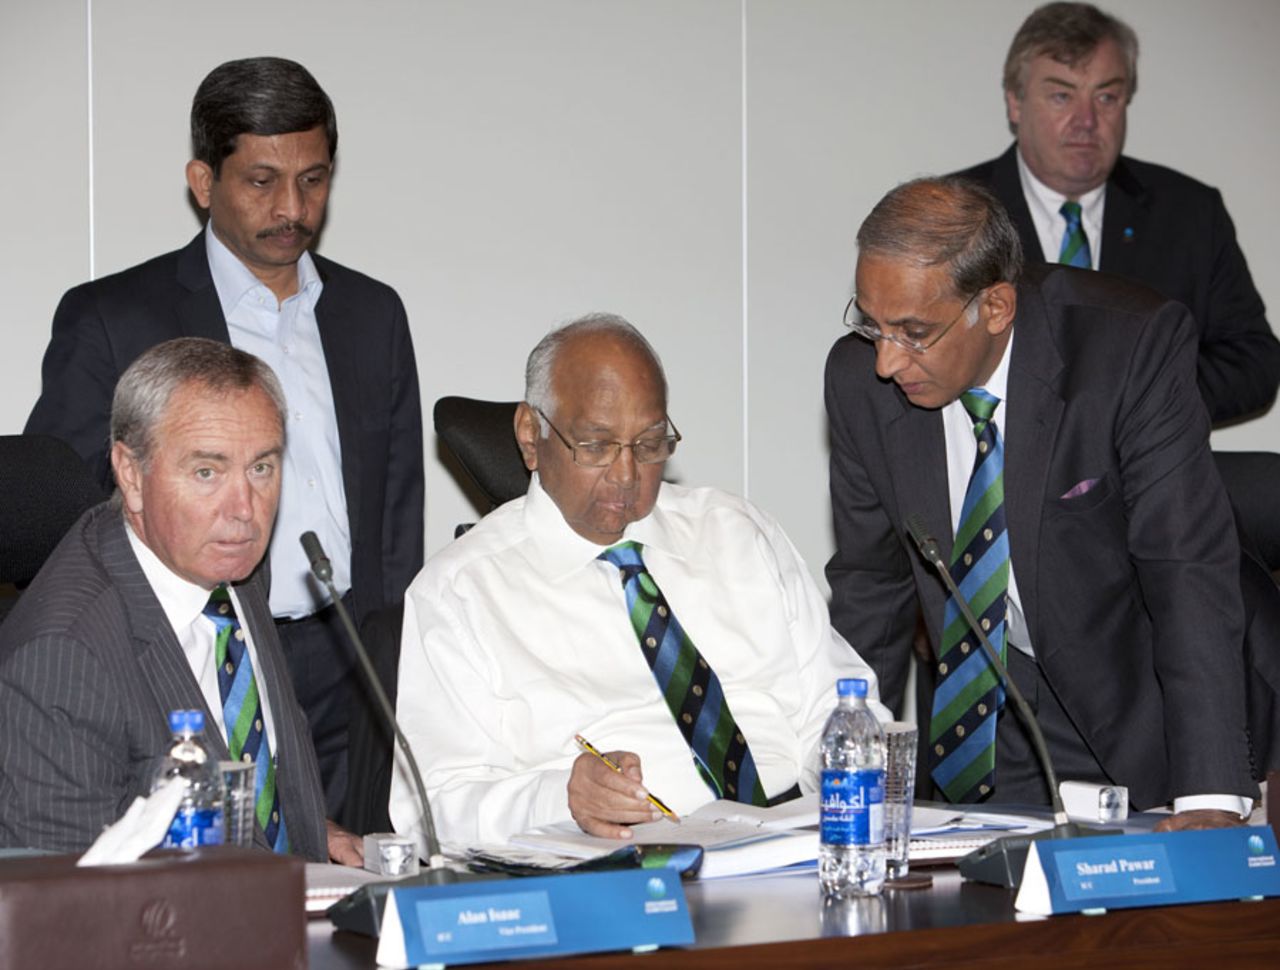 ICC president Sharad Pawar, chief Haroon Lorgat and vice-president Alan Isaac convene ahead of the ICC Executive Board meeting, Dubai, January 31, 2012